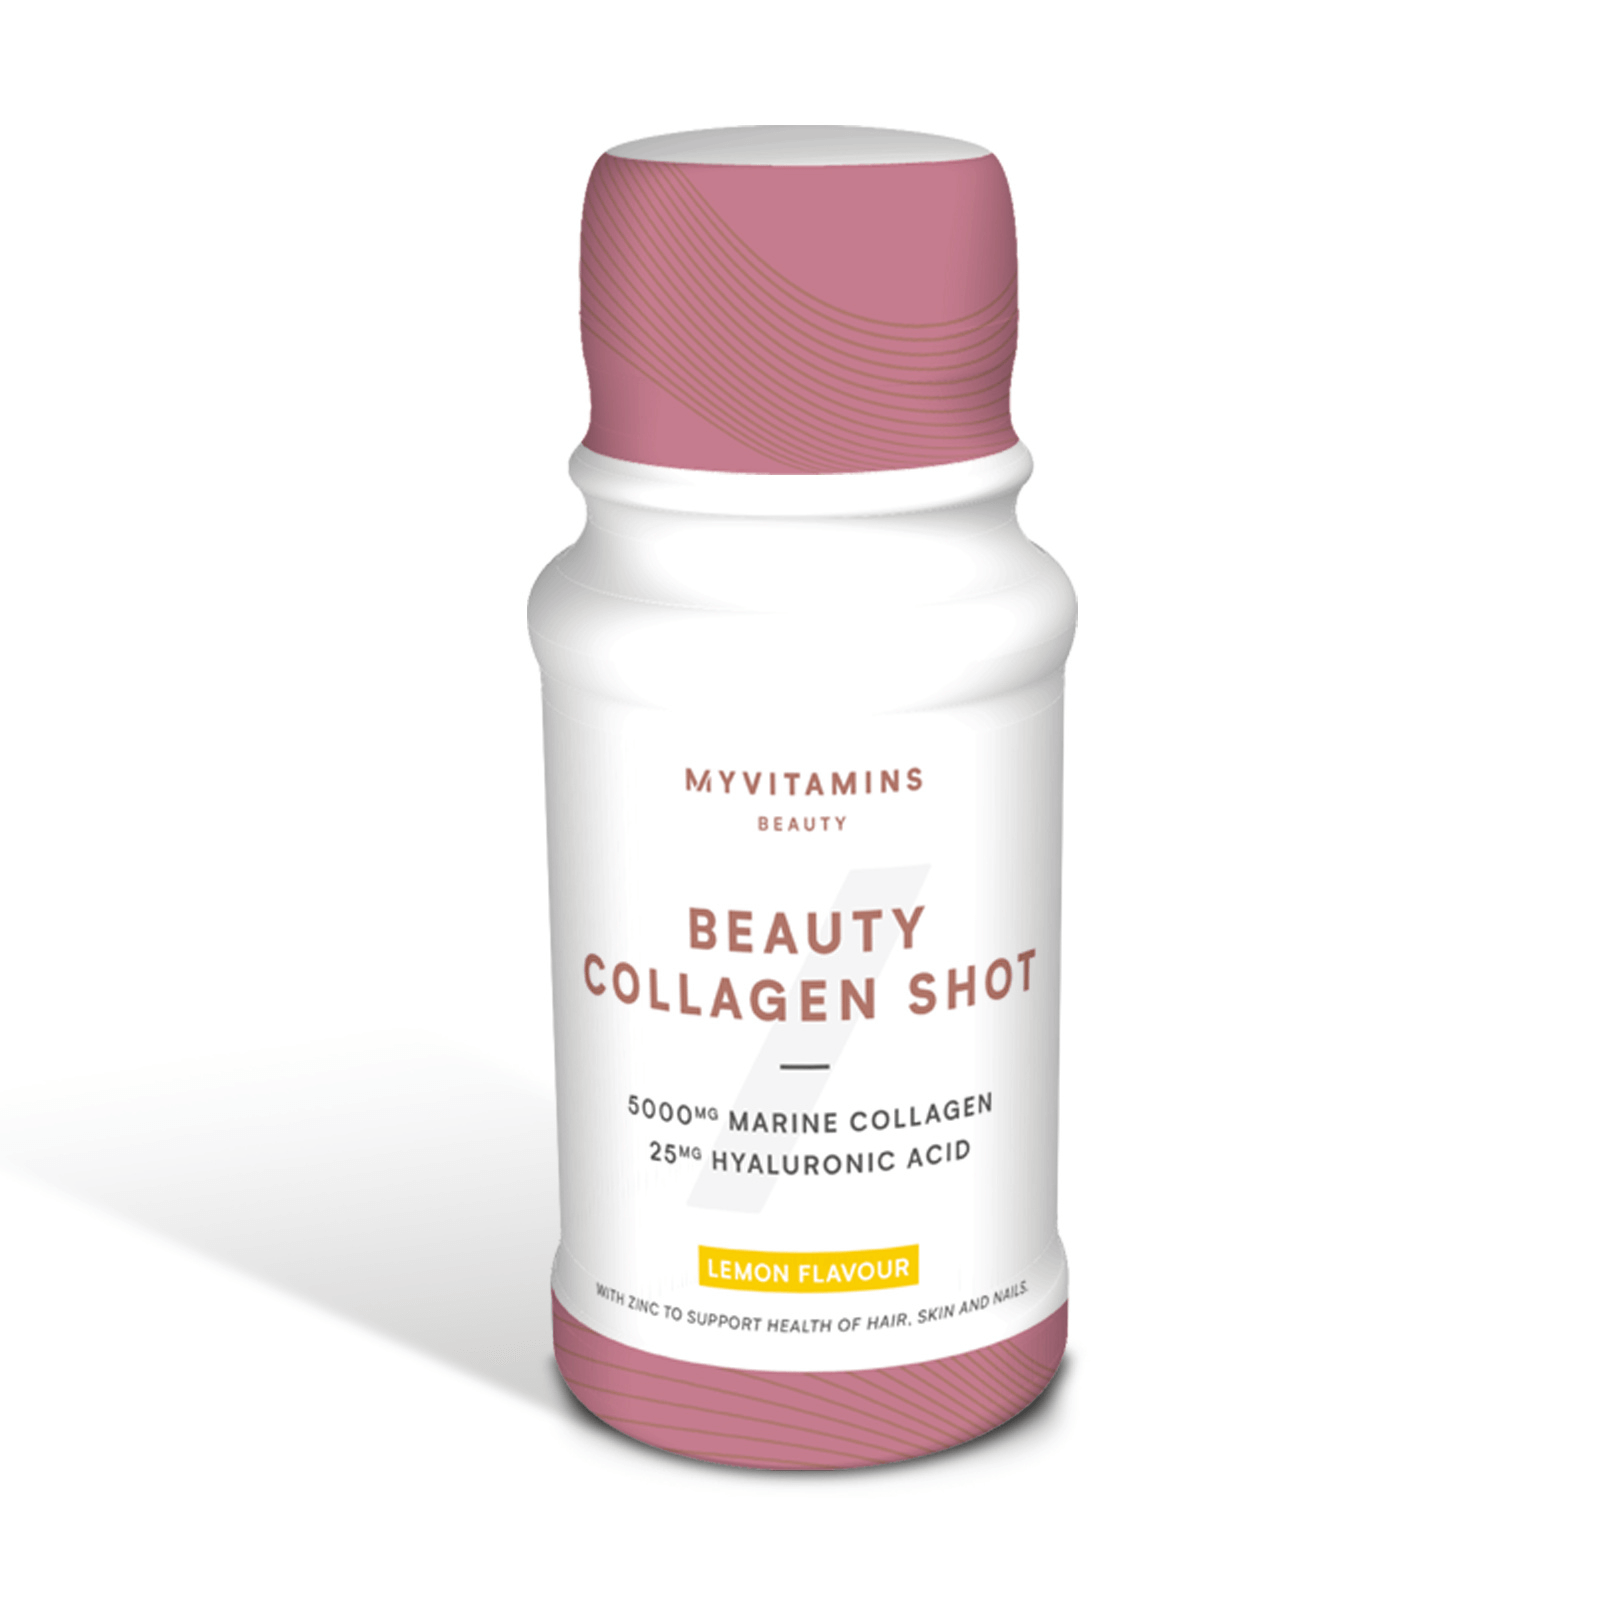 Myvitamins Collagen Beauty Shot (Sample) - Lemon